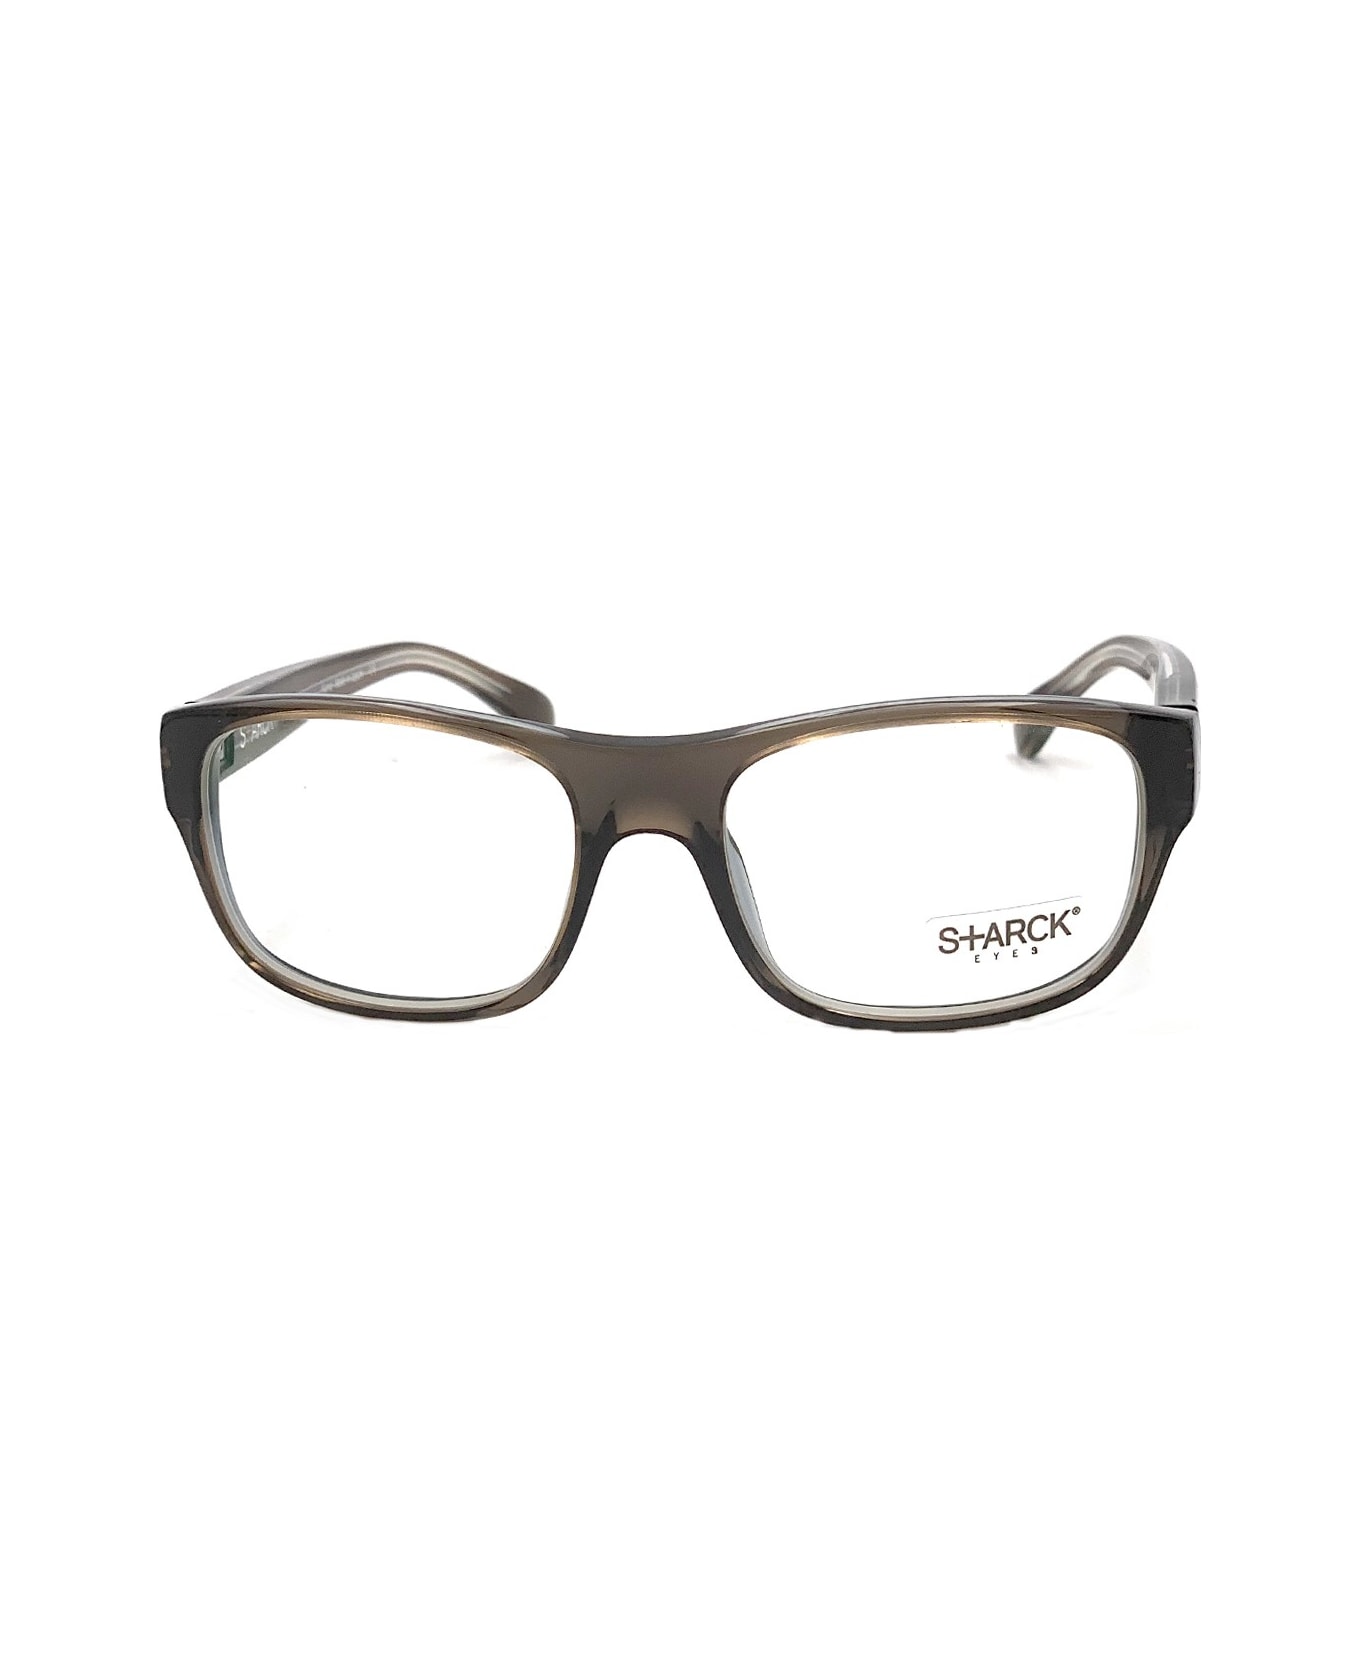 Philippe Starck Pl 1001 Glasses - Grigio アイウェア